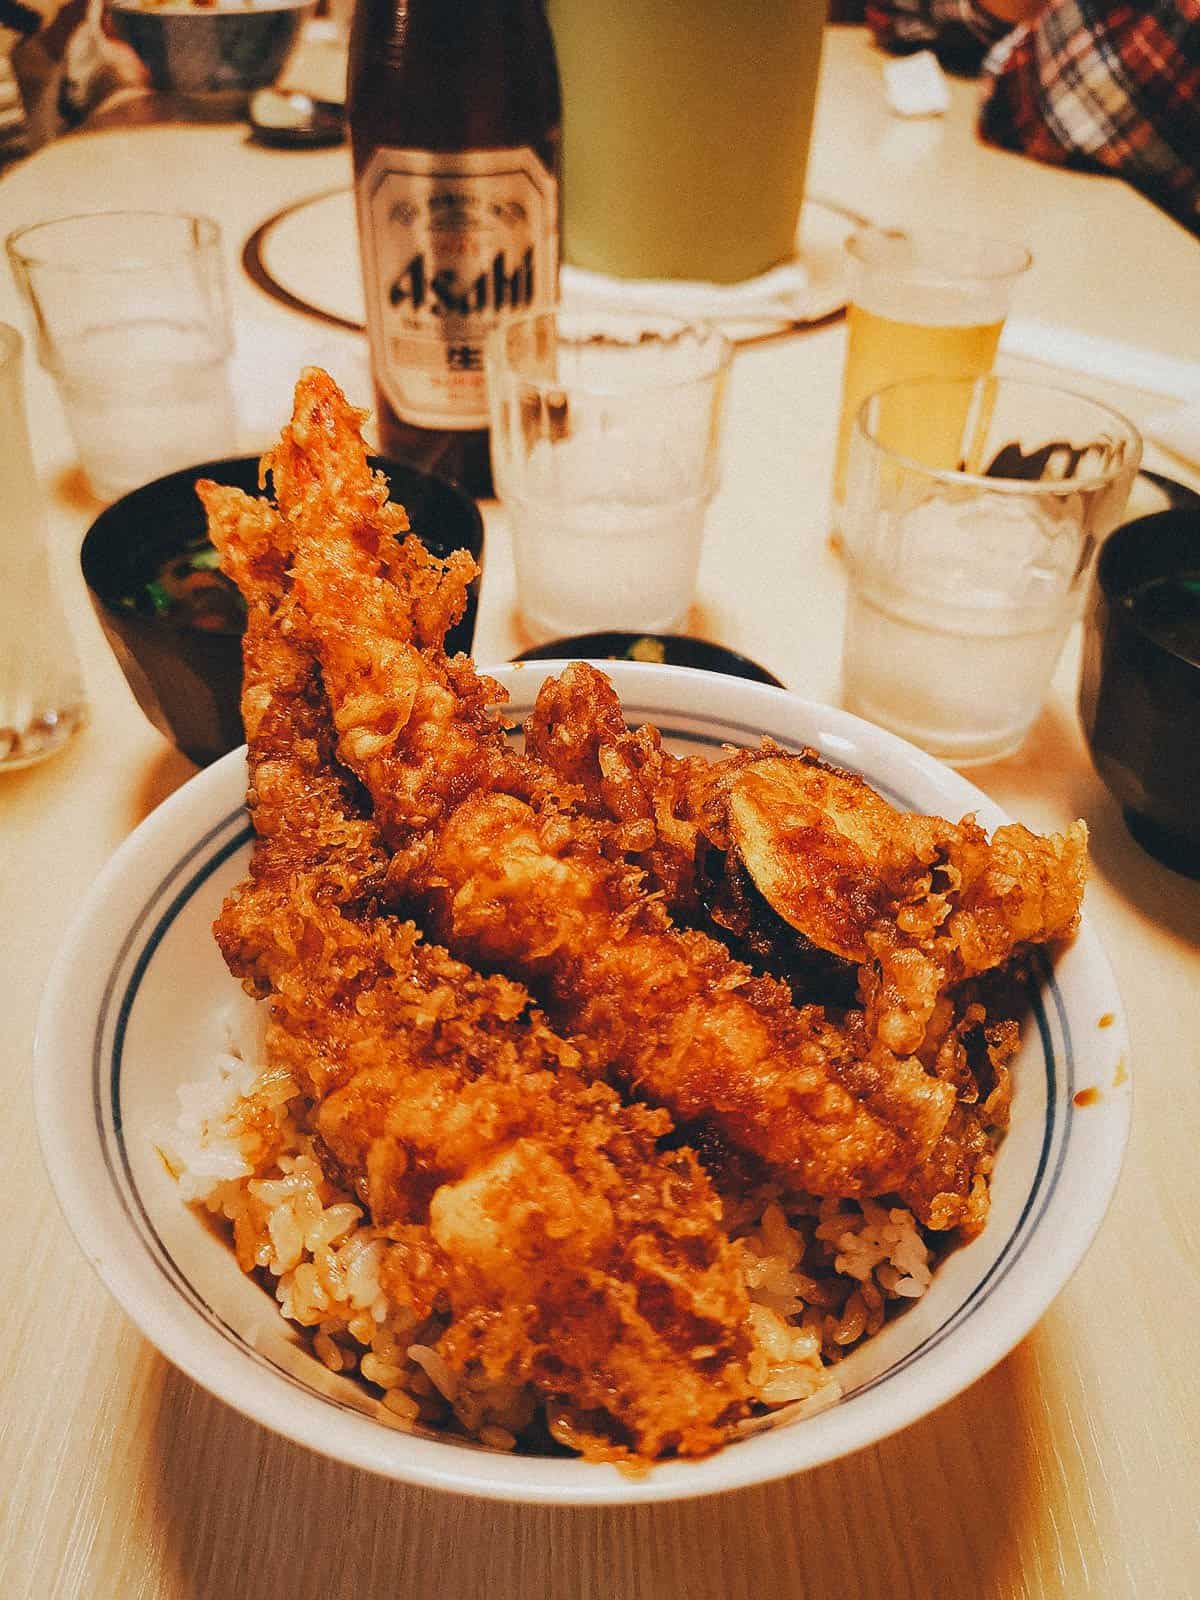 Tendon at Tentomi restaurant in Osaka